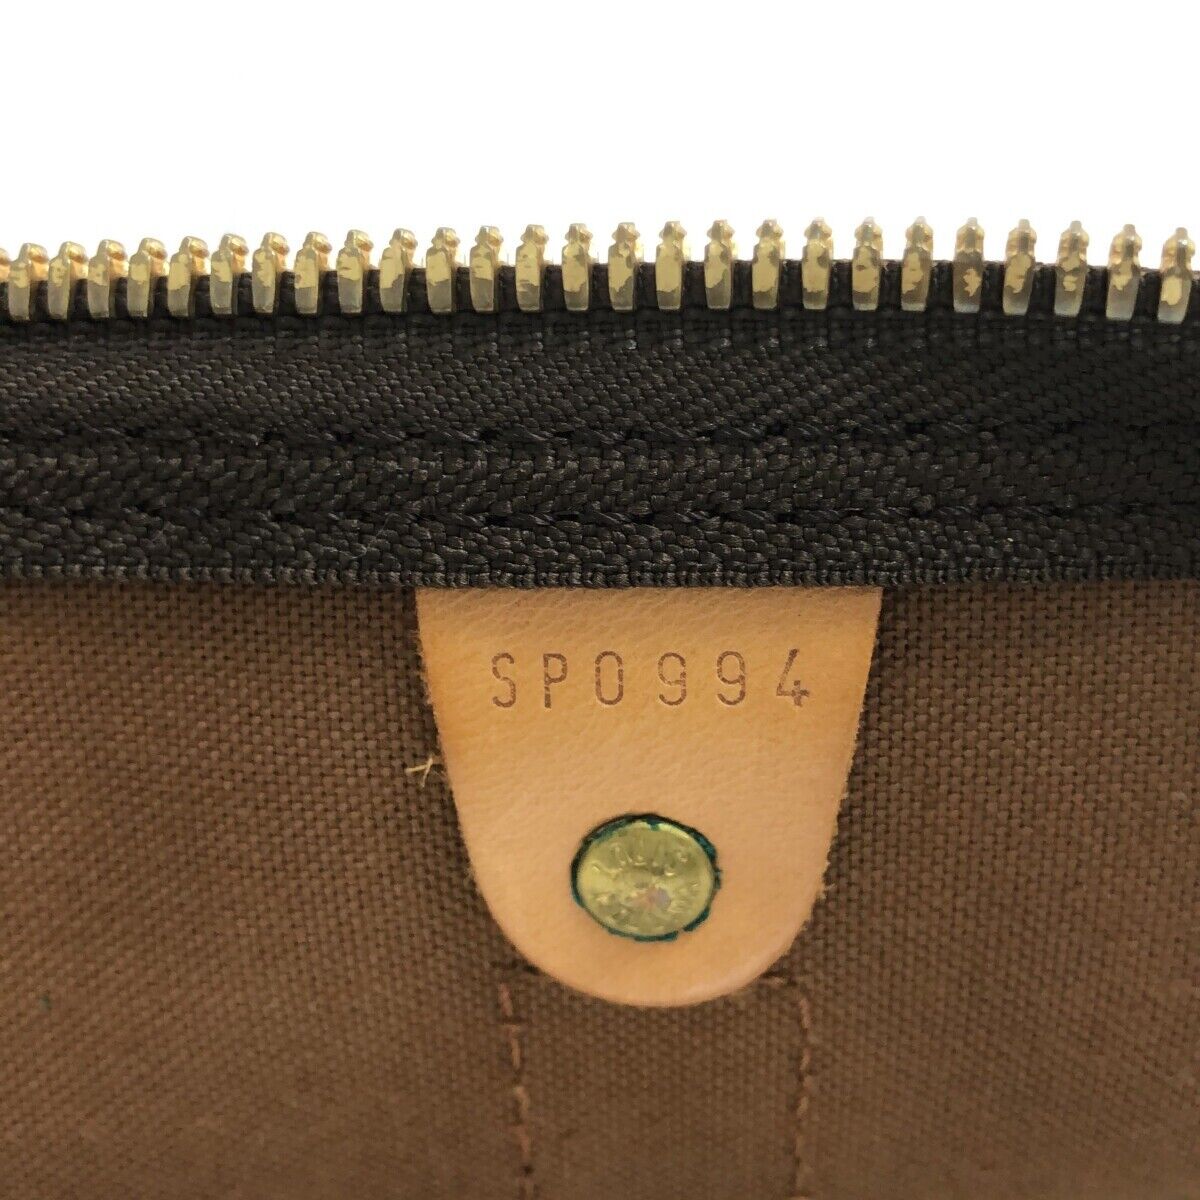 Louis Vuitton Boston Bag Monogram Keepall 50 M41426